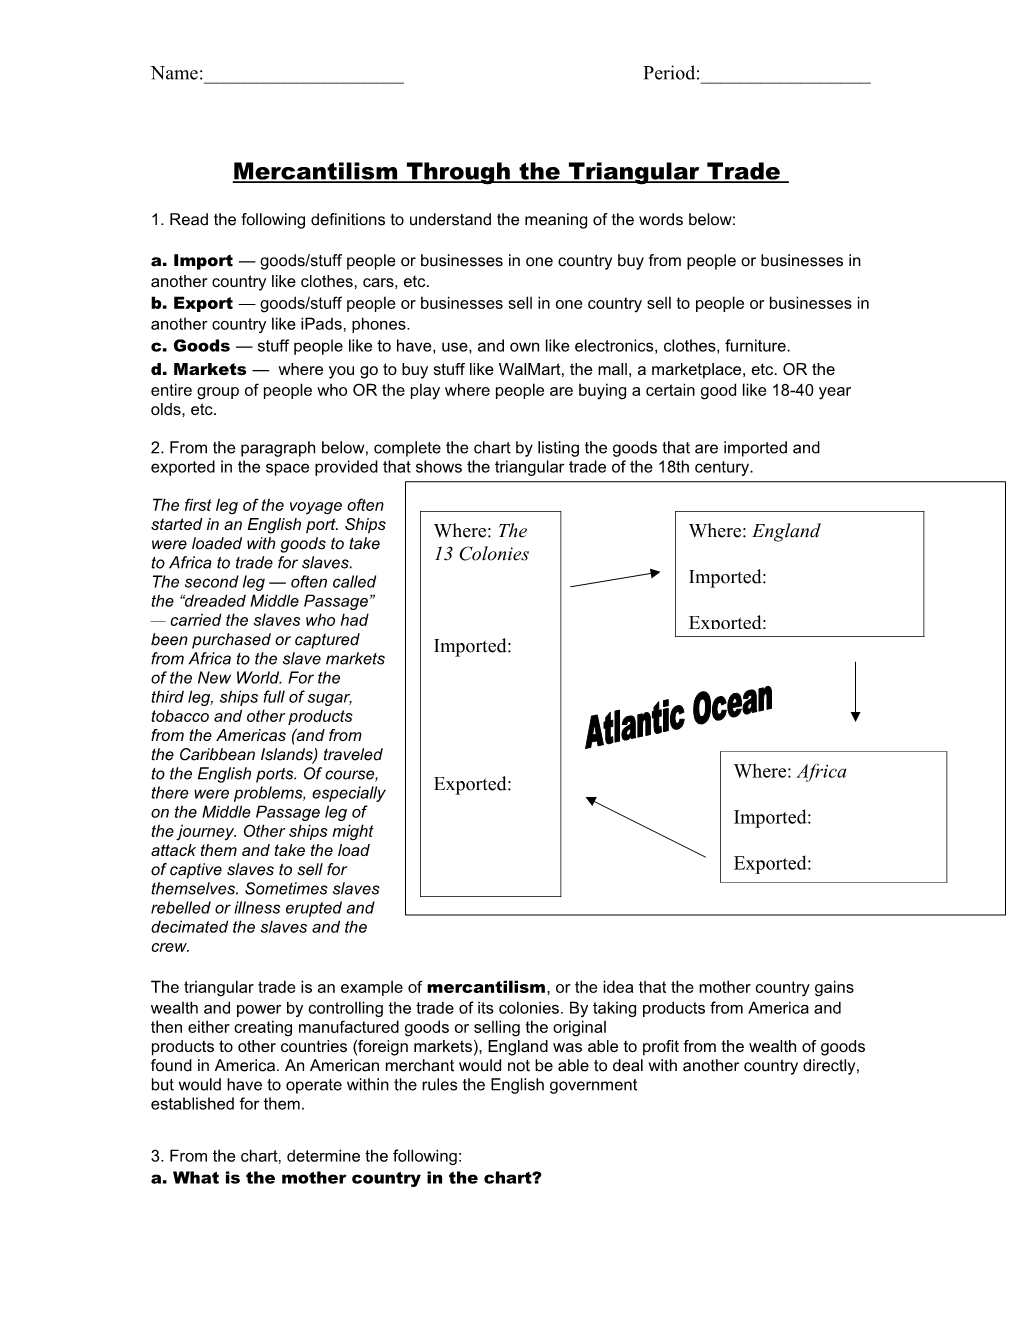 Mercantilism Through the Triangular Trade